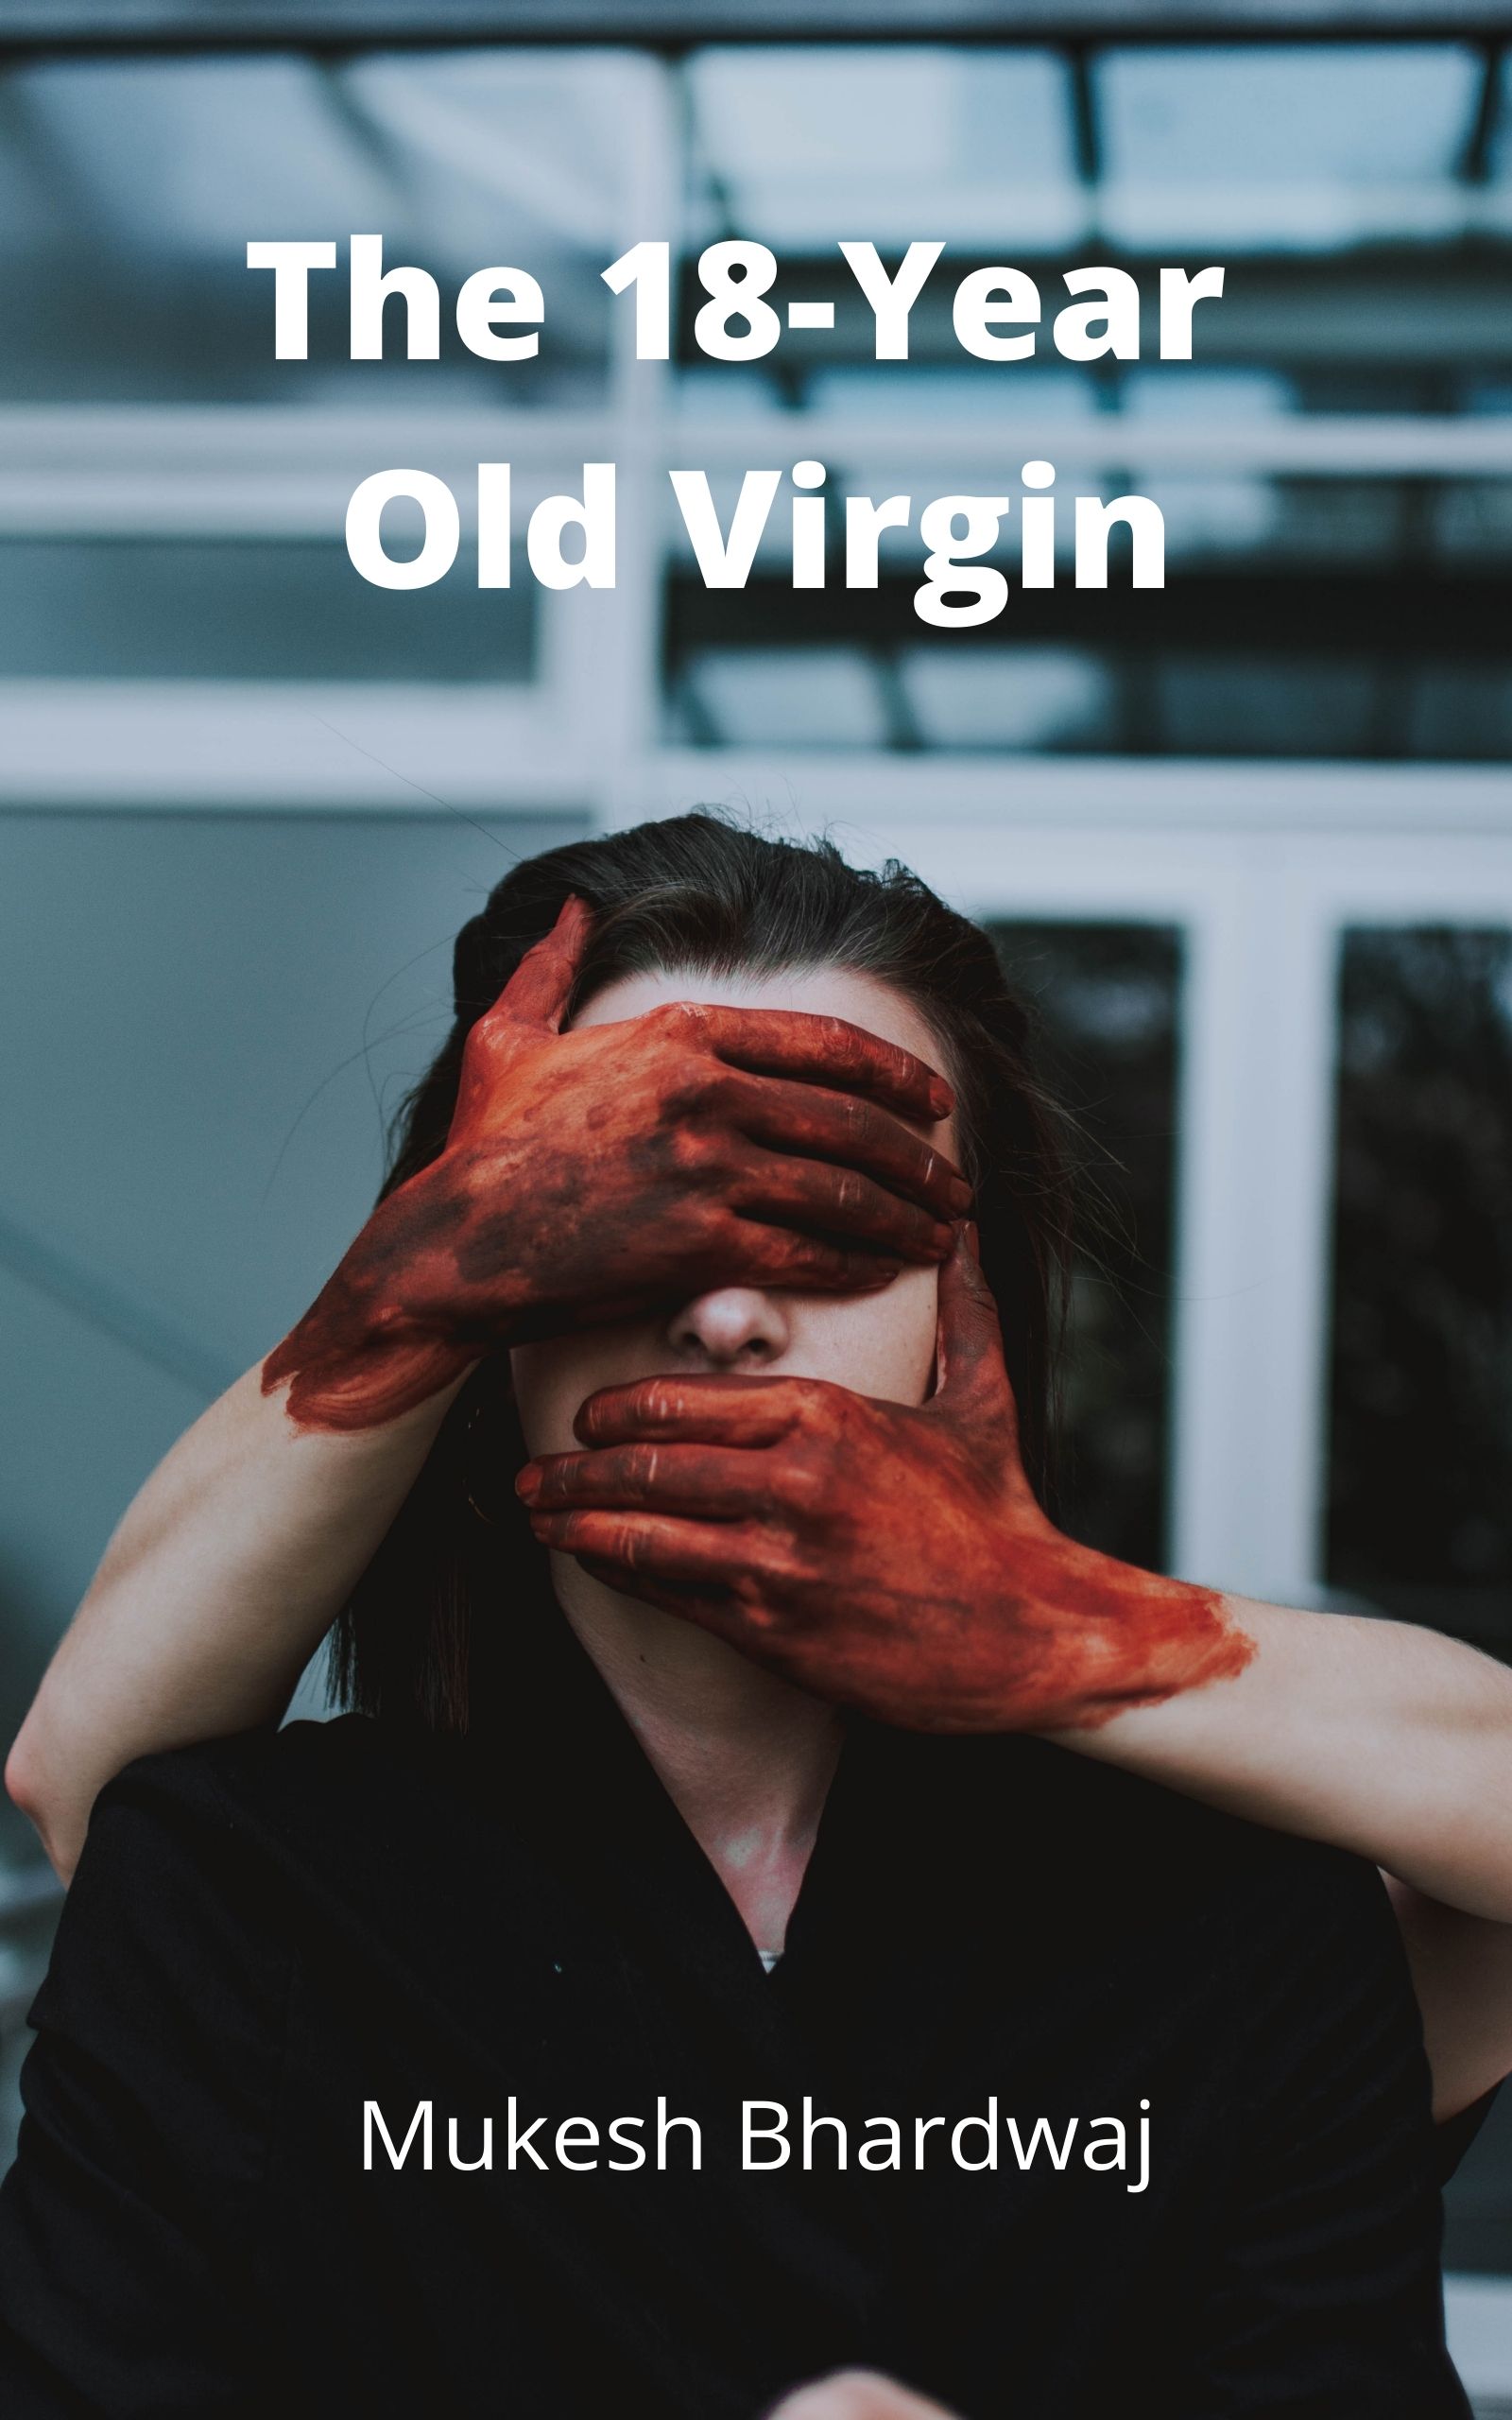 cal hughes share 18 year old virgin photos